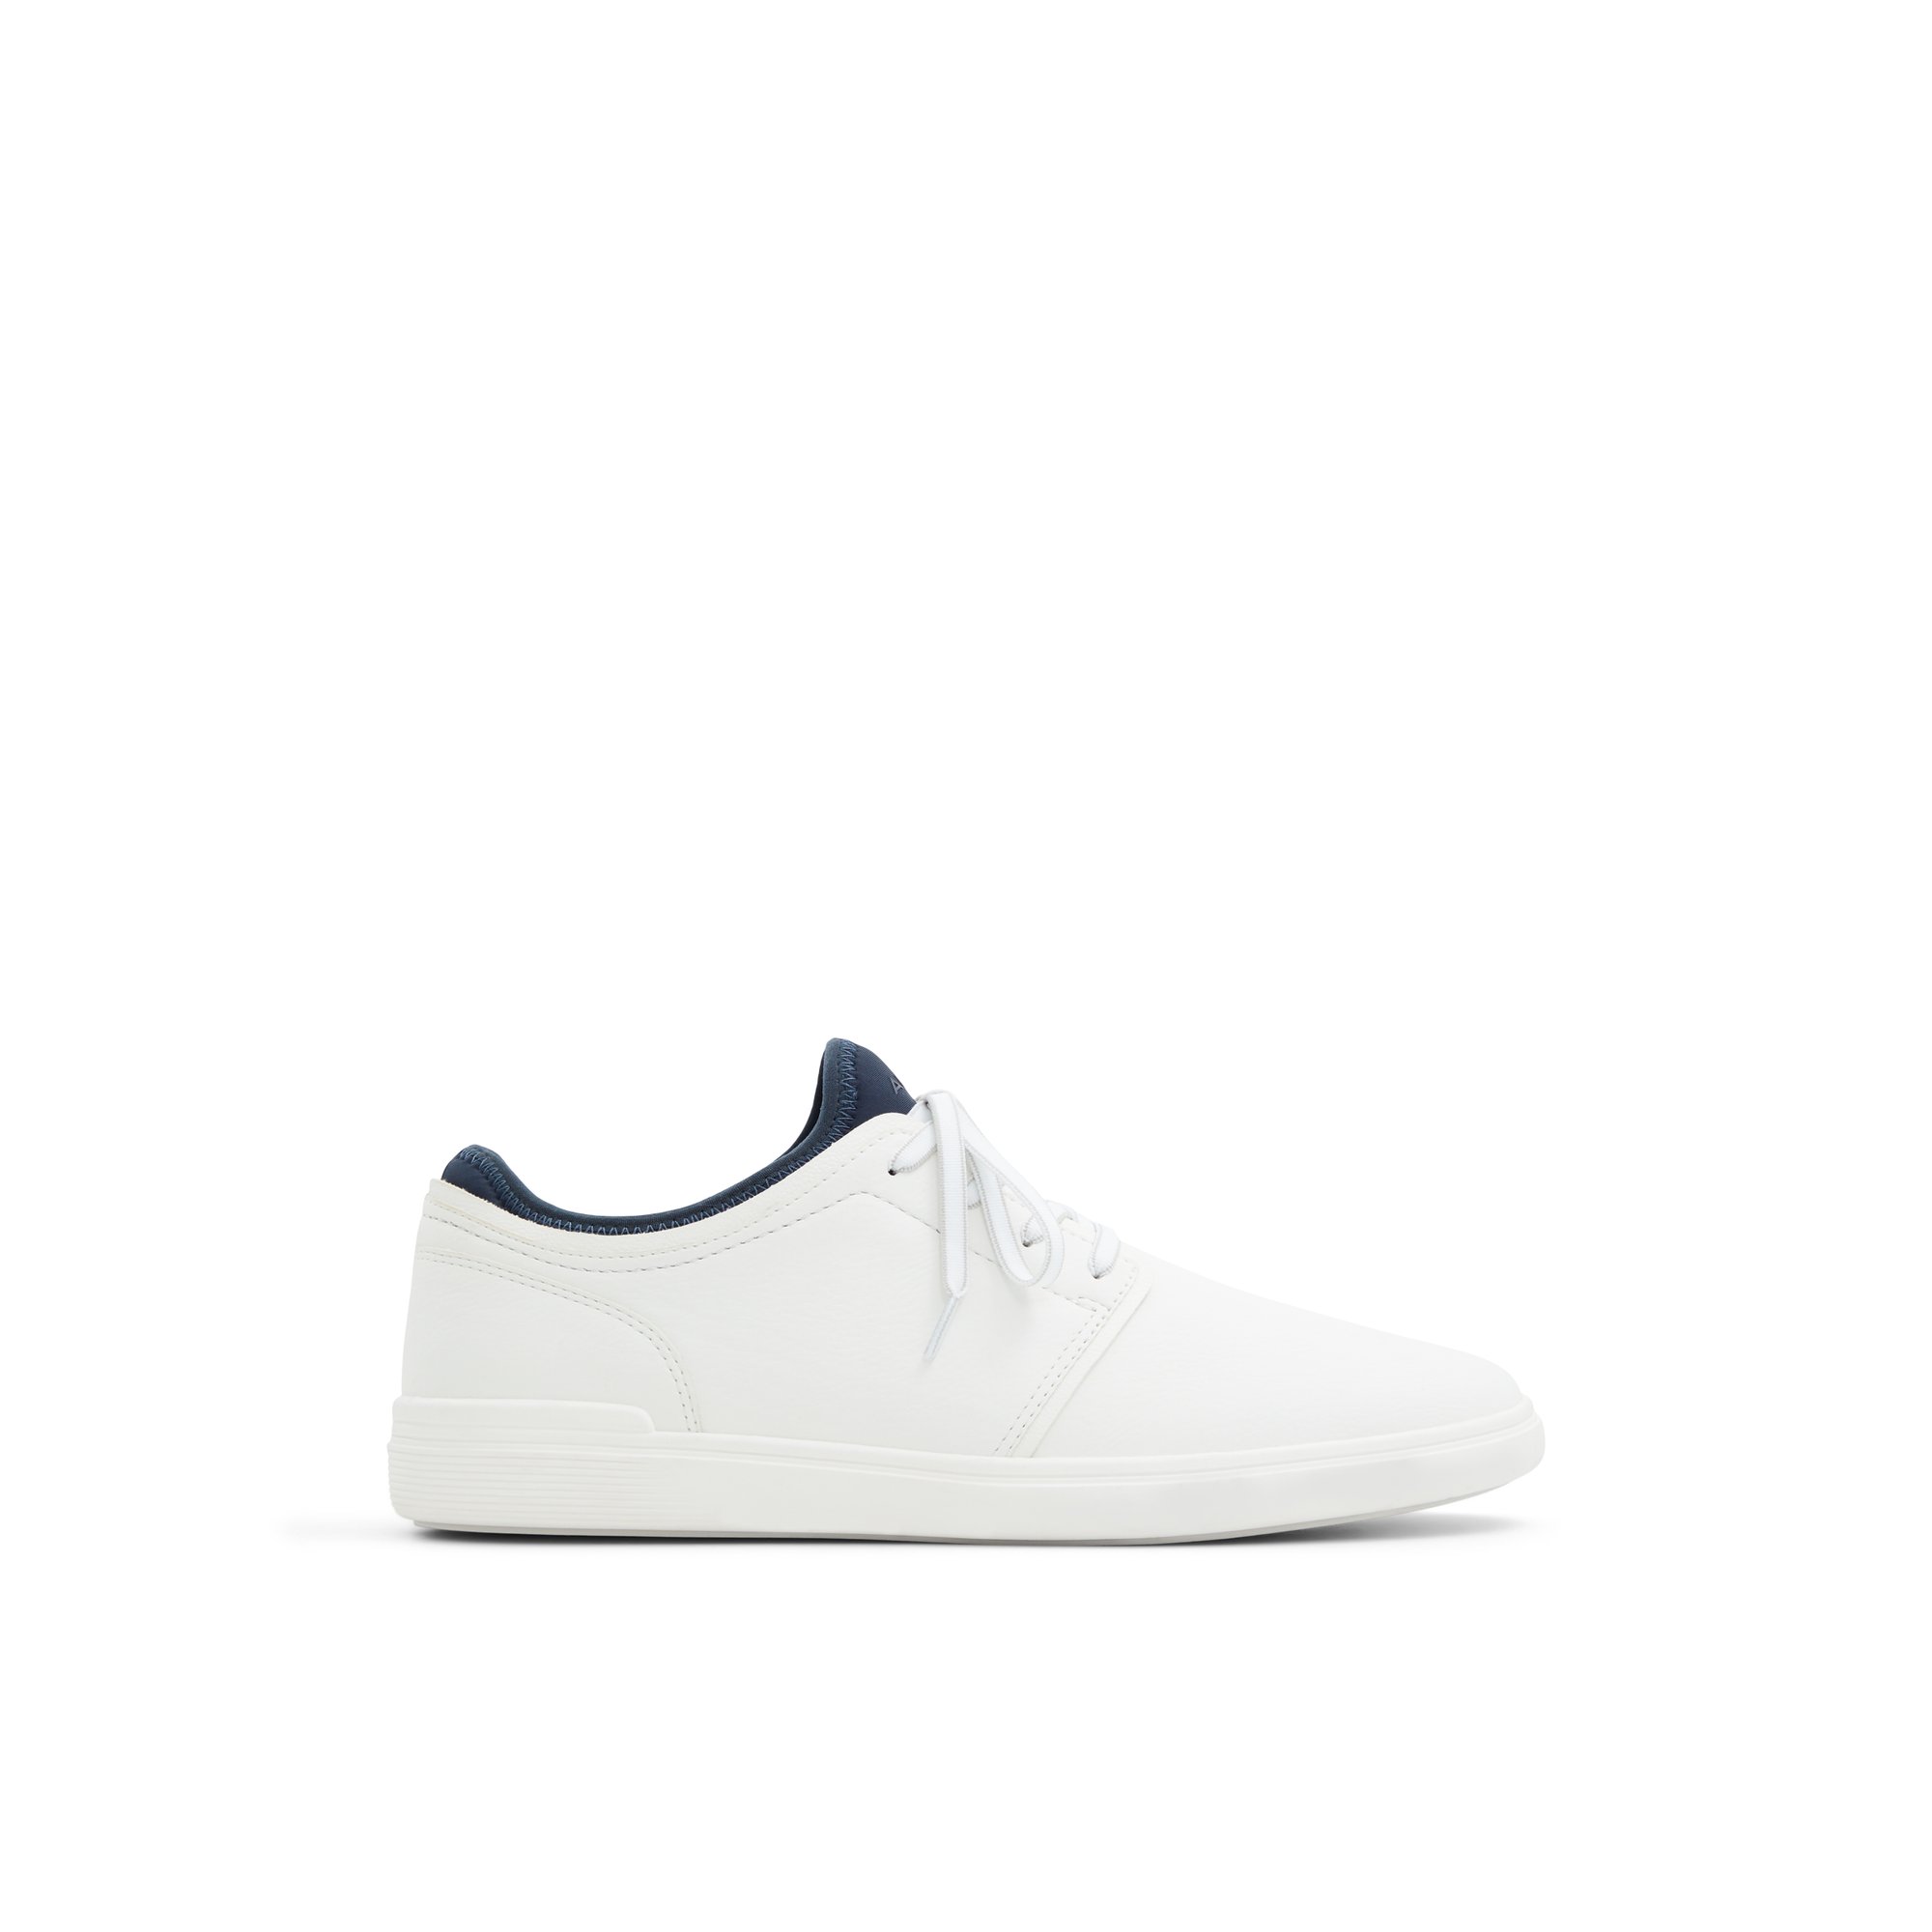 ALDO Omono - Men's Sneakers Low Top - White